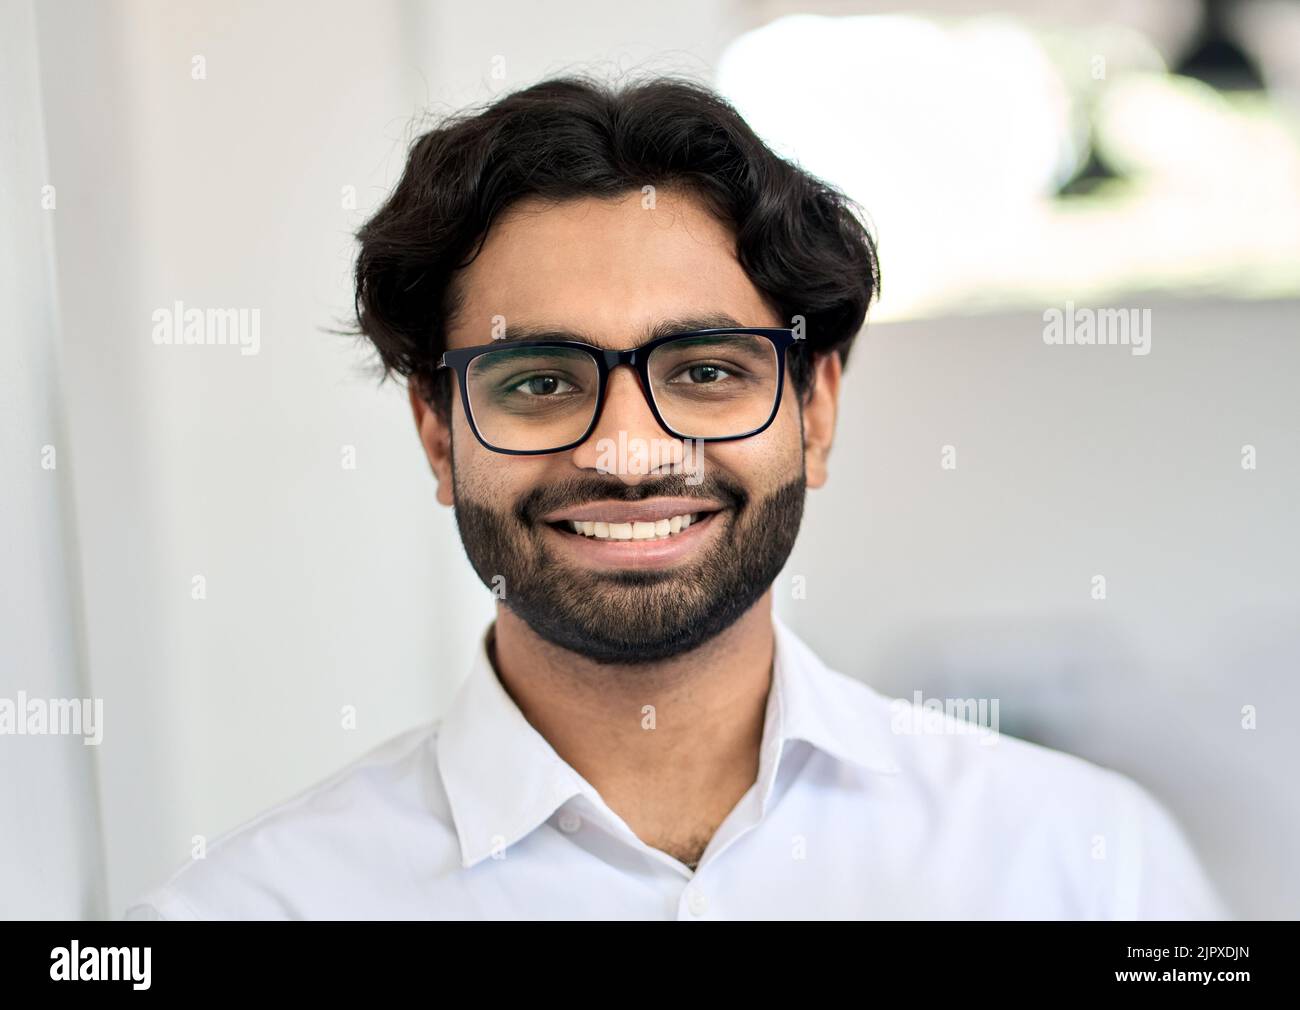 Smiling young indian business man wearing eyeglasses, headshot portrait. Stock Photo